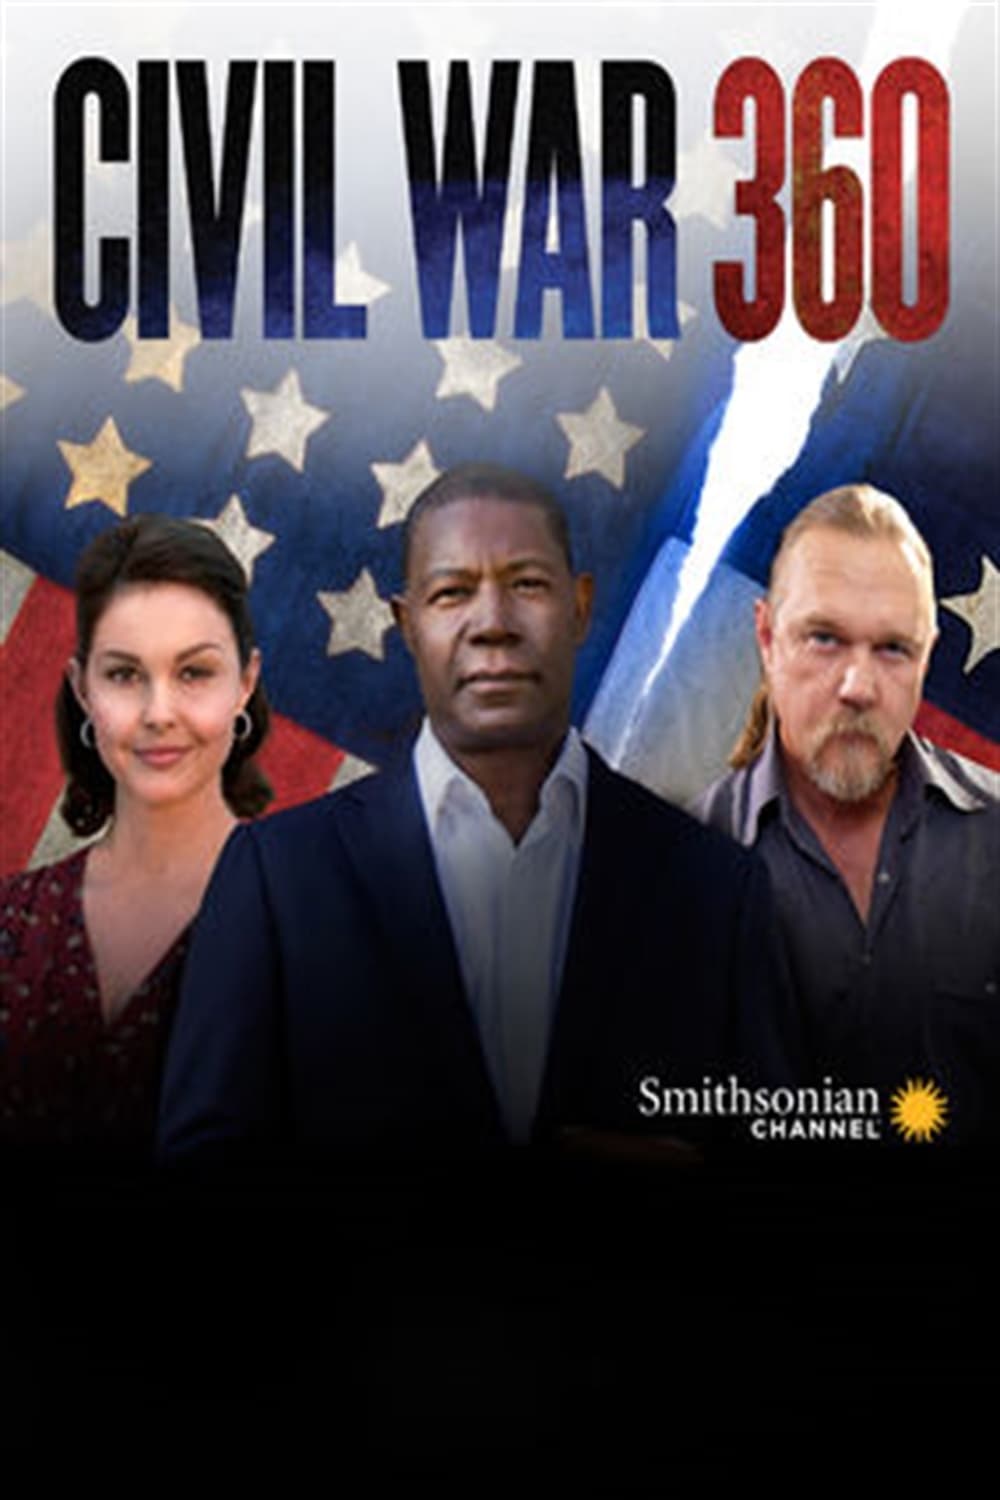 Civil War 360 TV Shows About American Civil War